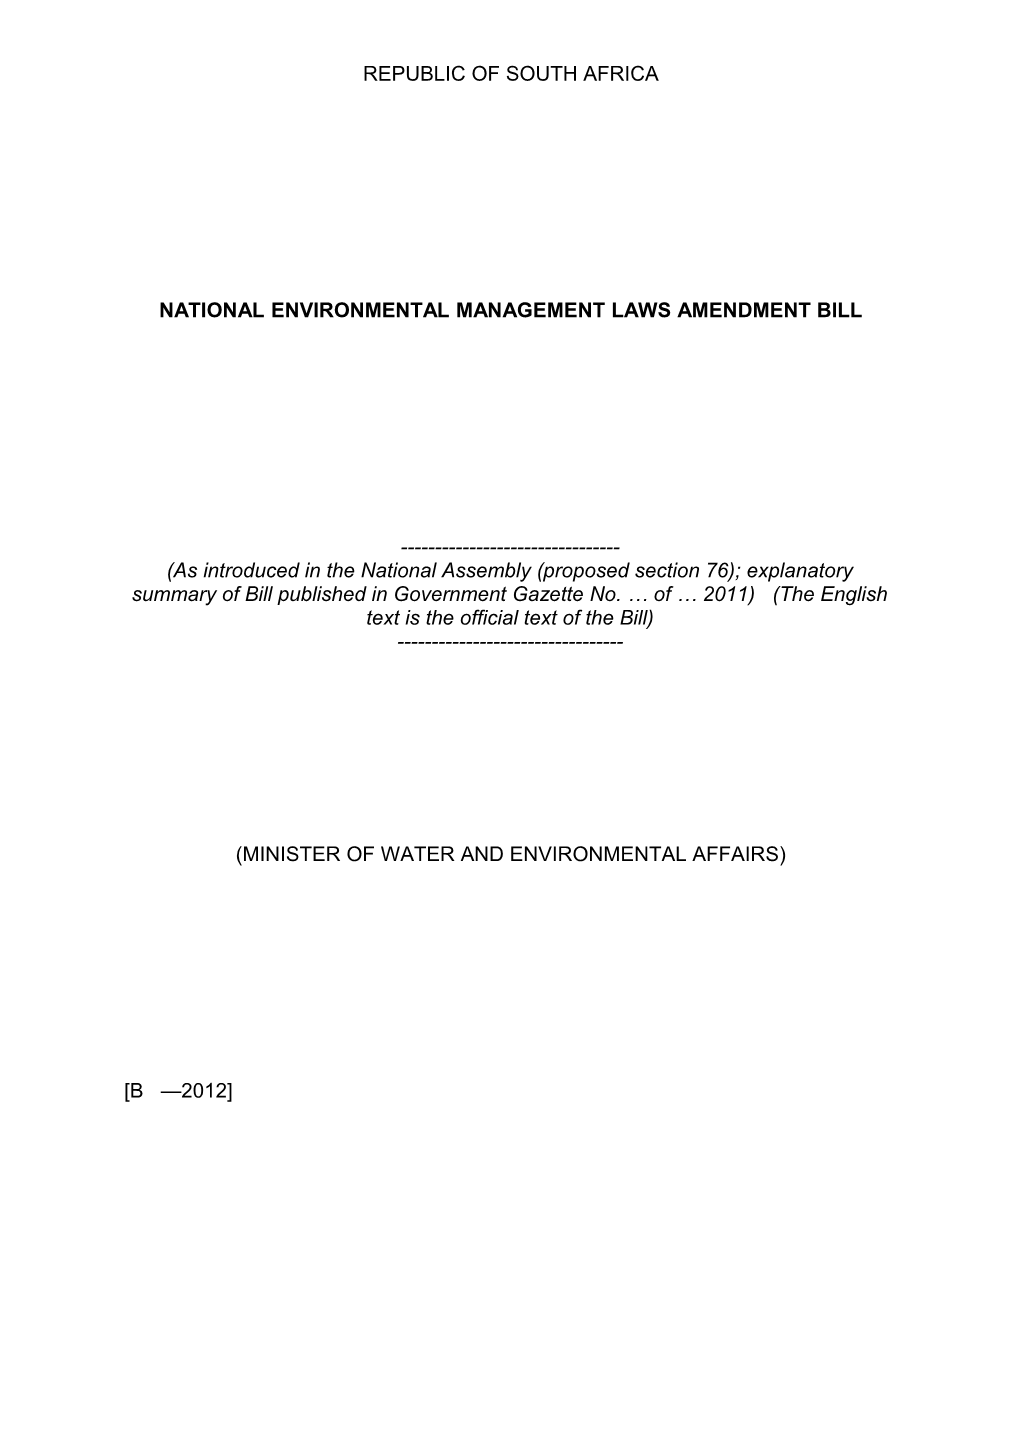 National Environmental Management Laws Amendment Bill